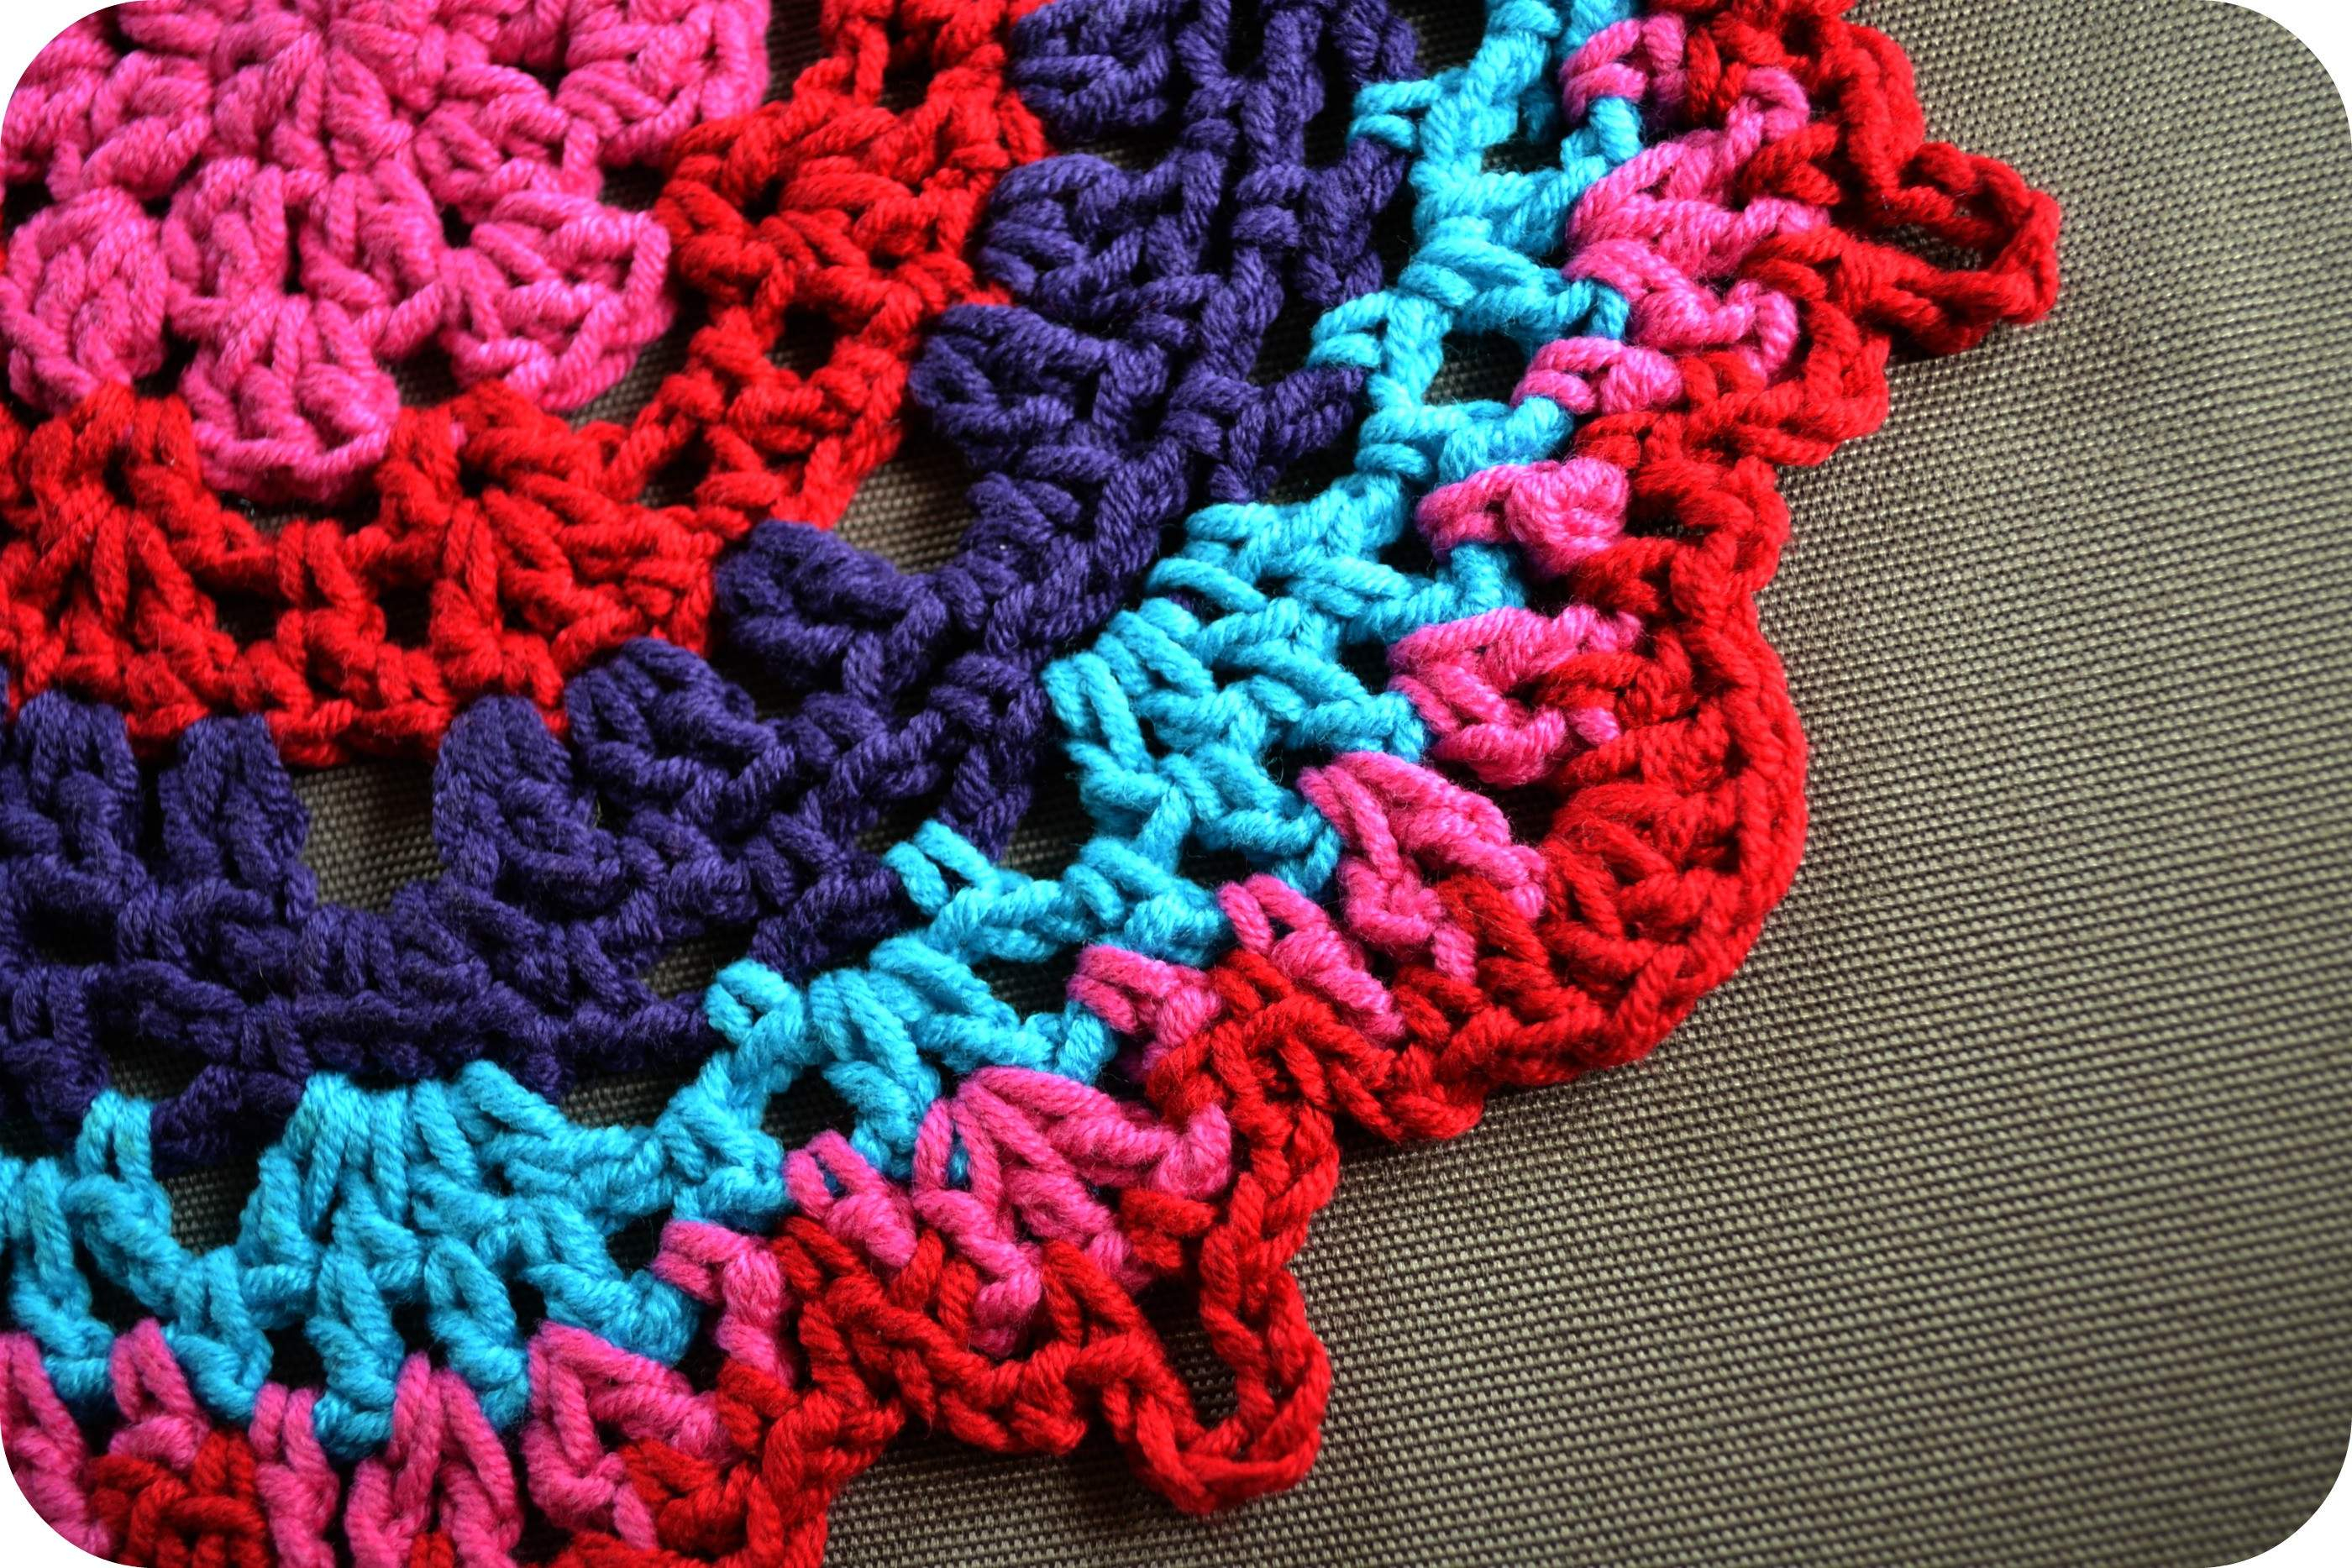 Free Crochet Doily Patterns Fresh These 10 Beautiful And Free Crochet Doily Patterns Are Free